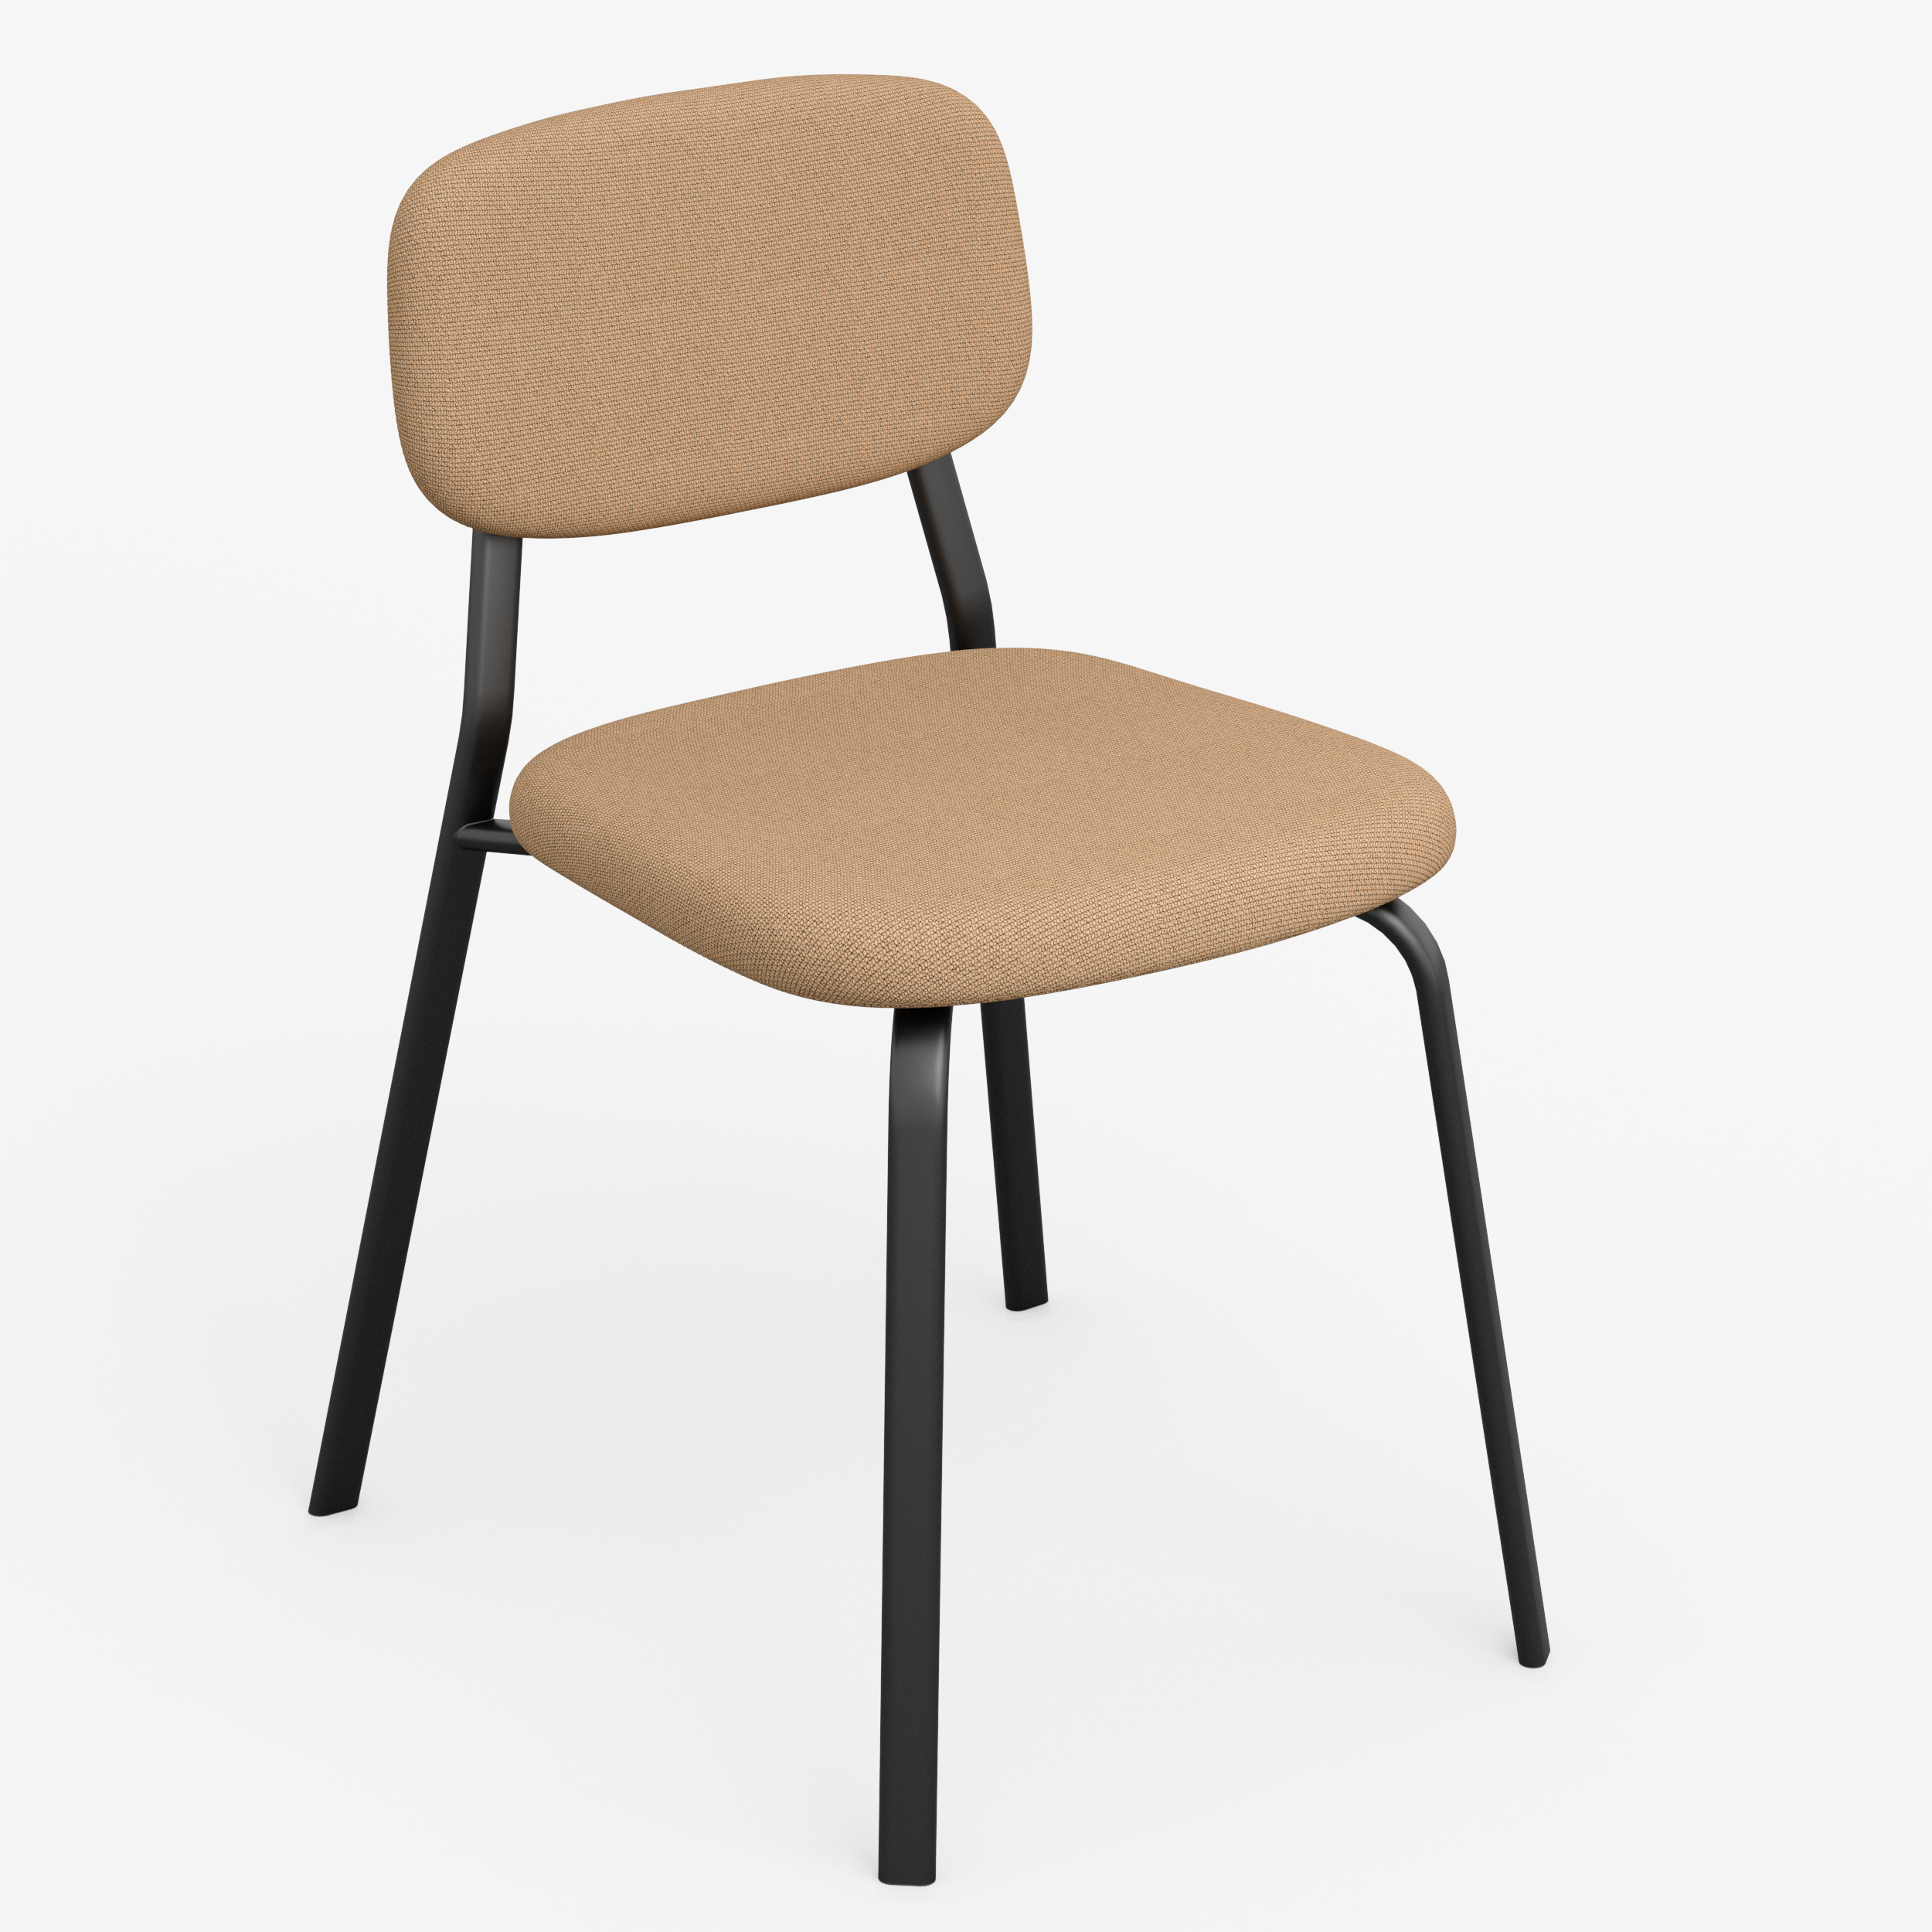 Form - Chair (Rectangle, Persian Orange)